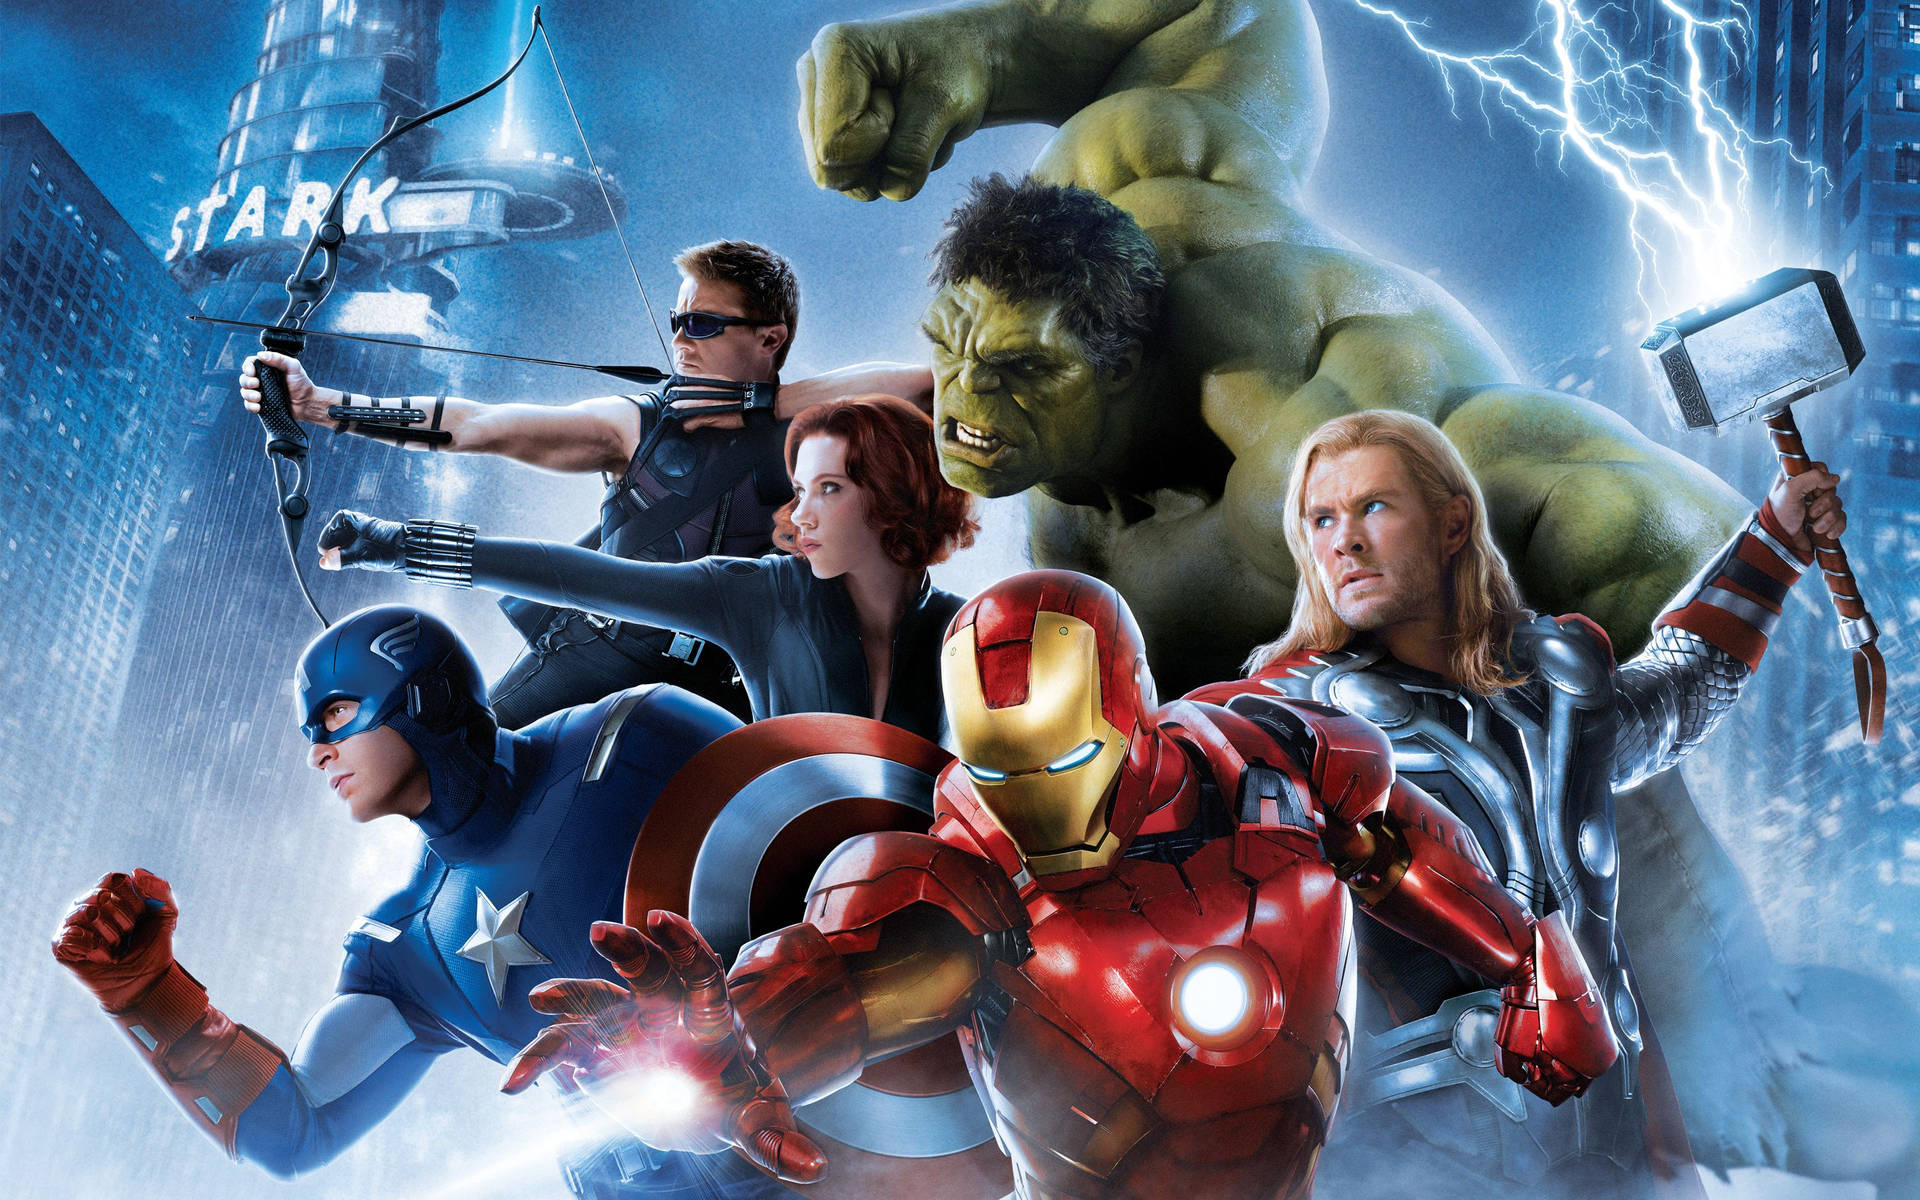 Avengers superhero characters in one, Iron man, Hulk, Captain America, Black Widow and Thor.